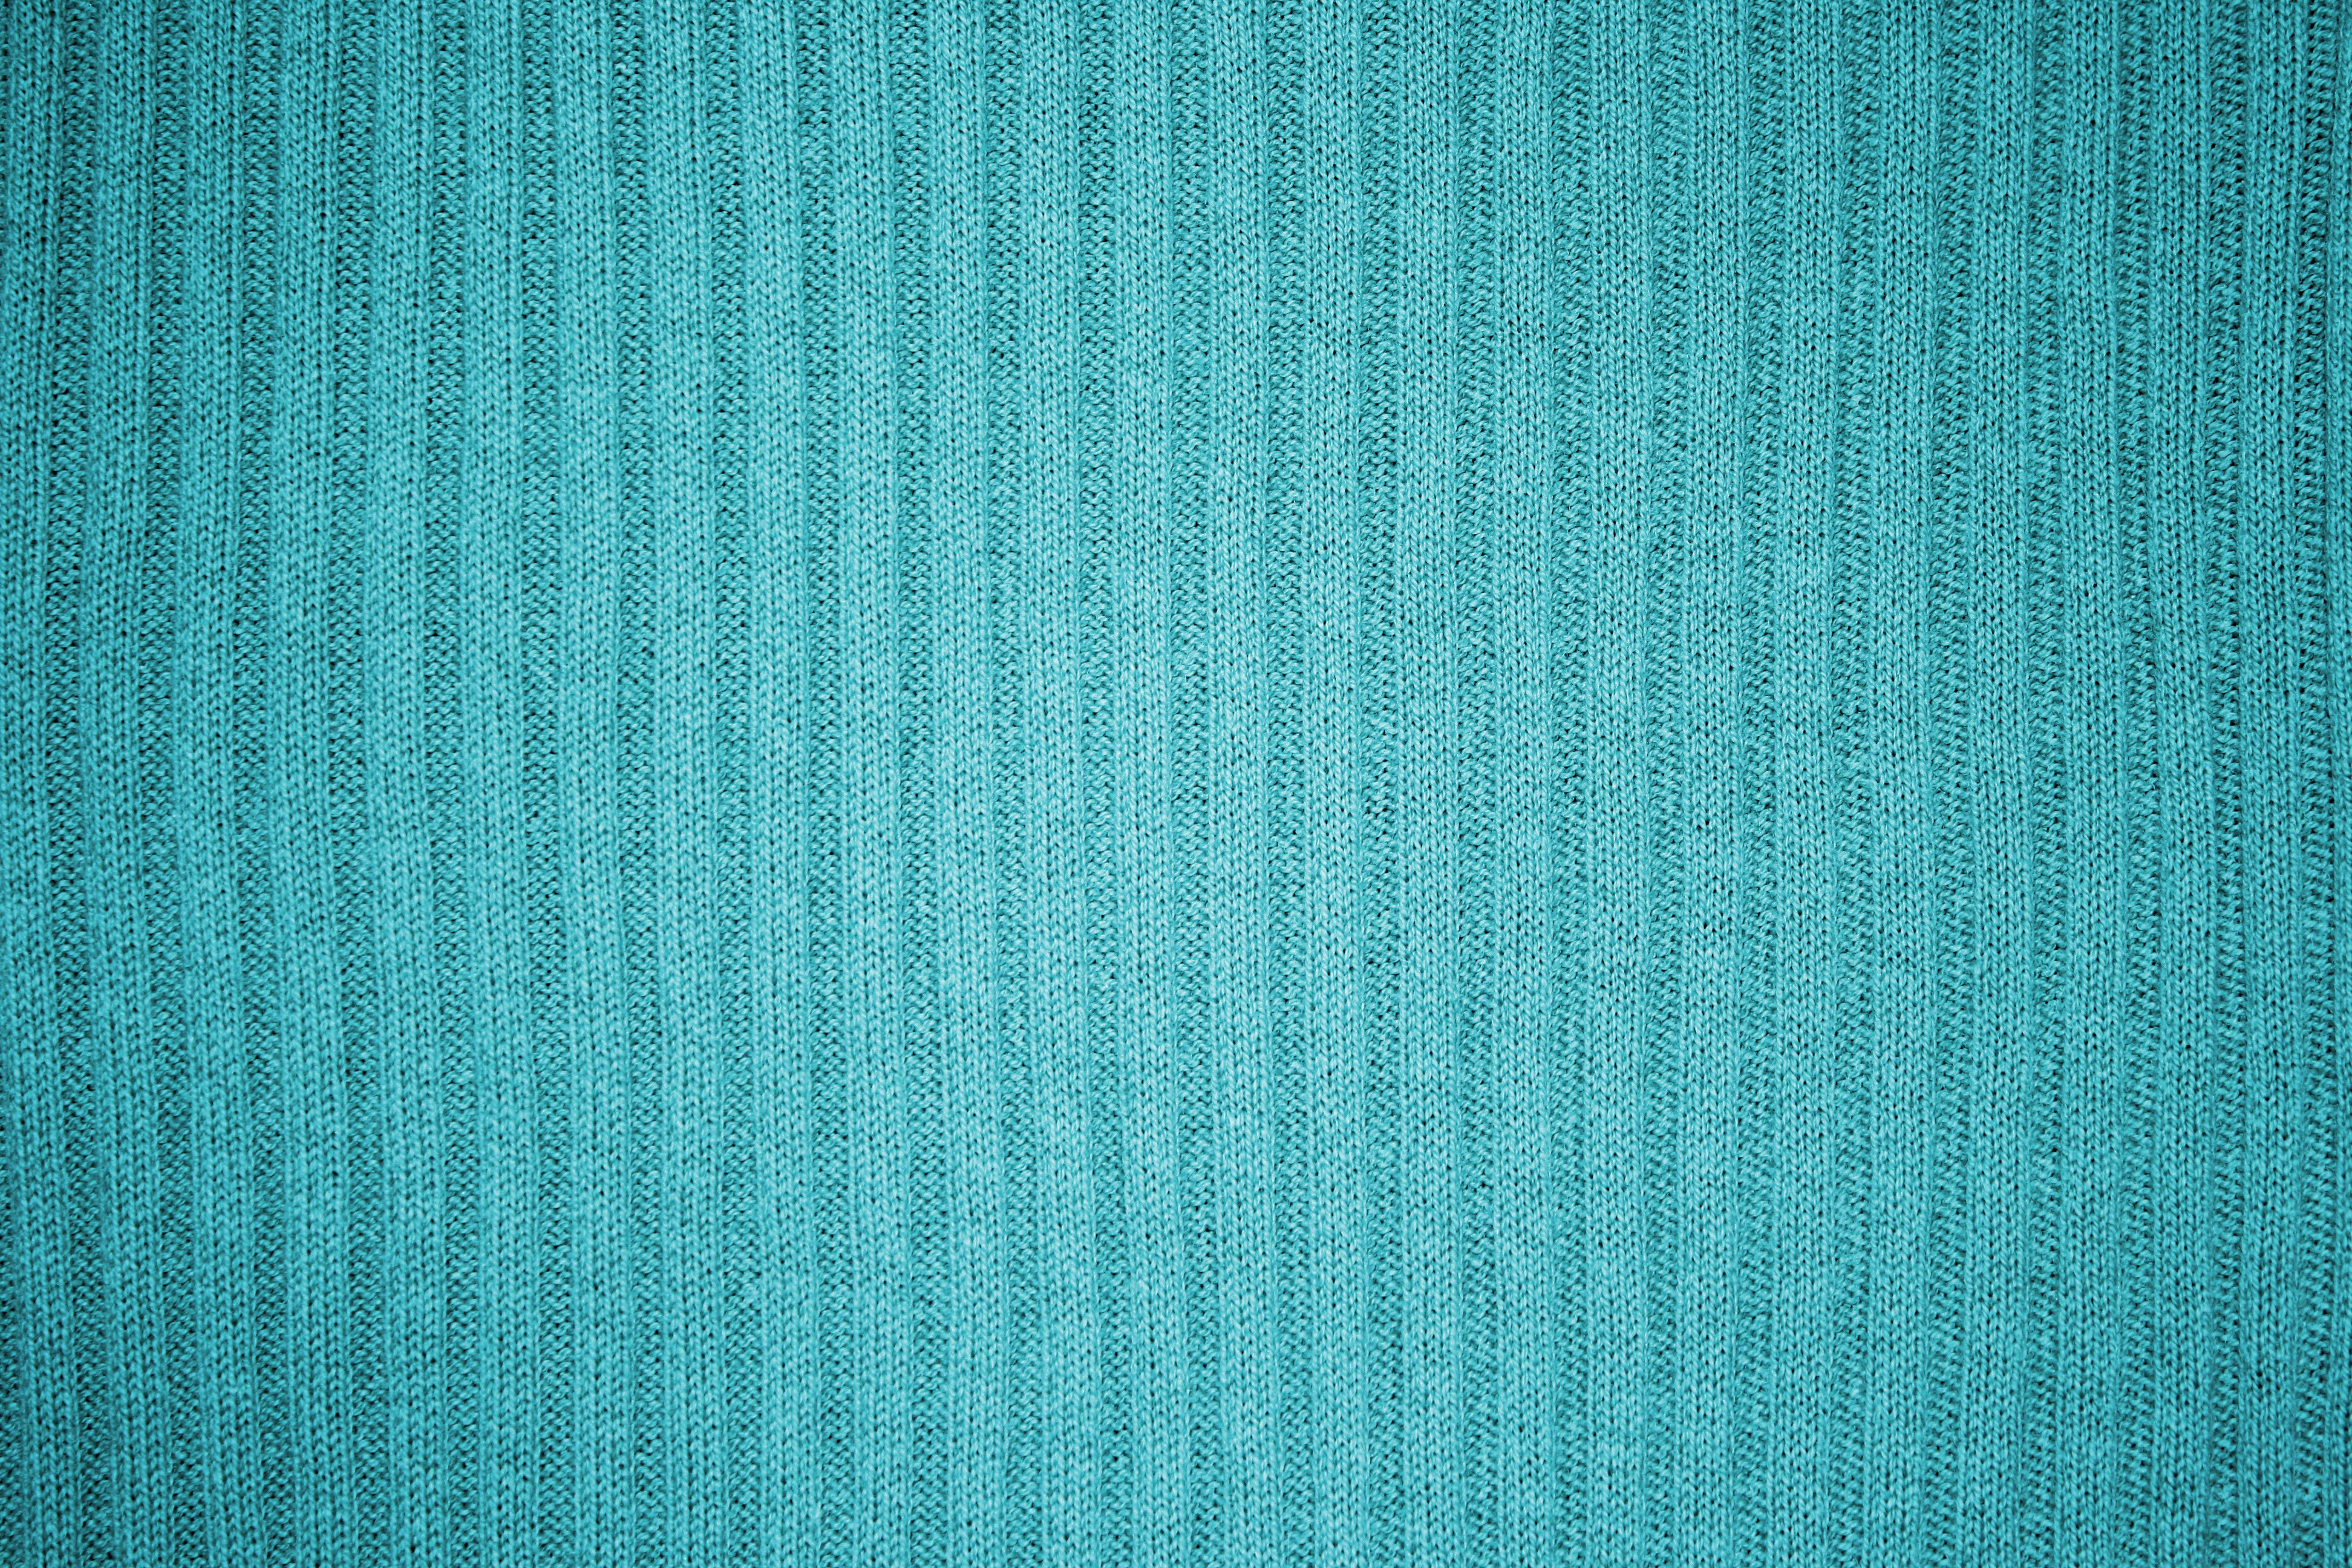 Turquoise Blue Wallpaper 7537 HD Wallpapers Glefia.com